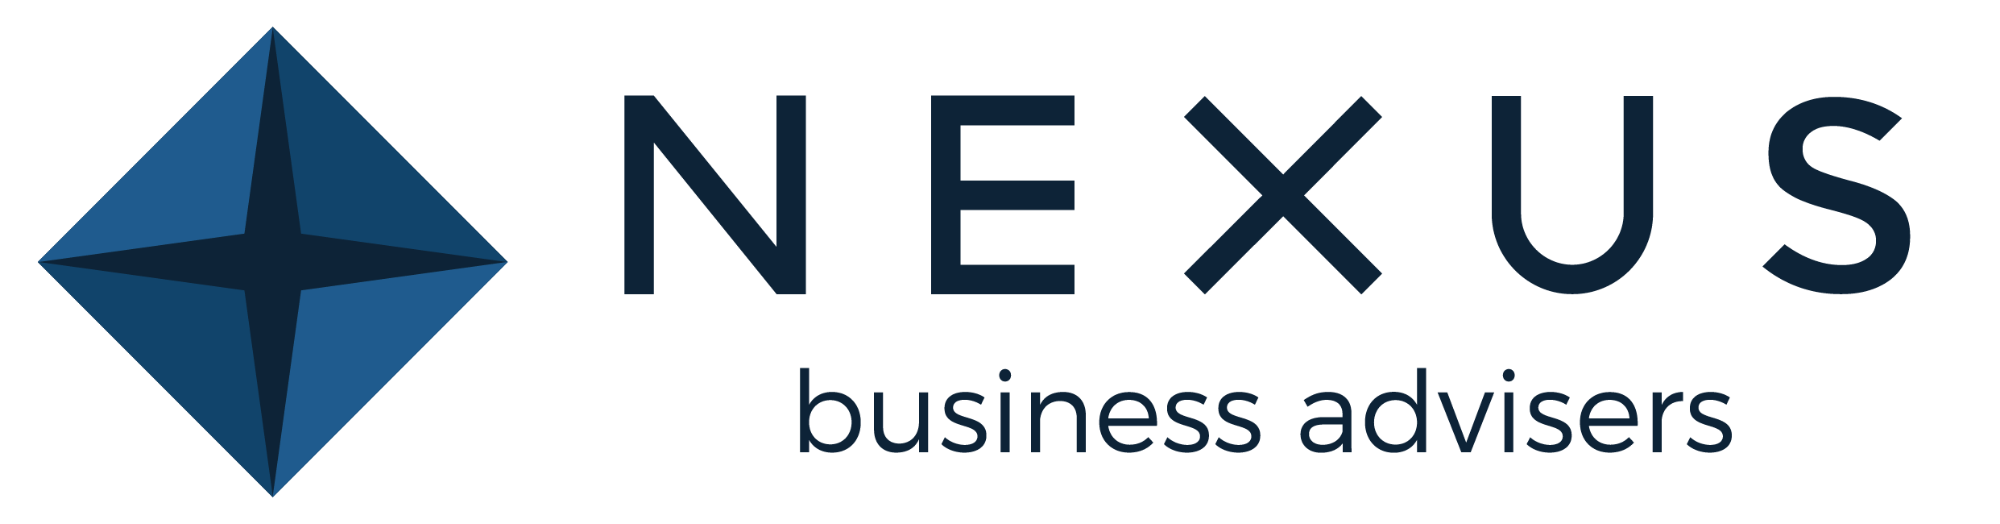 Nexus Business Advisers